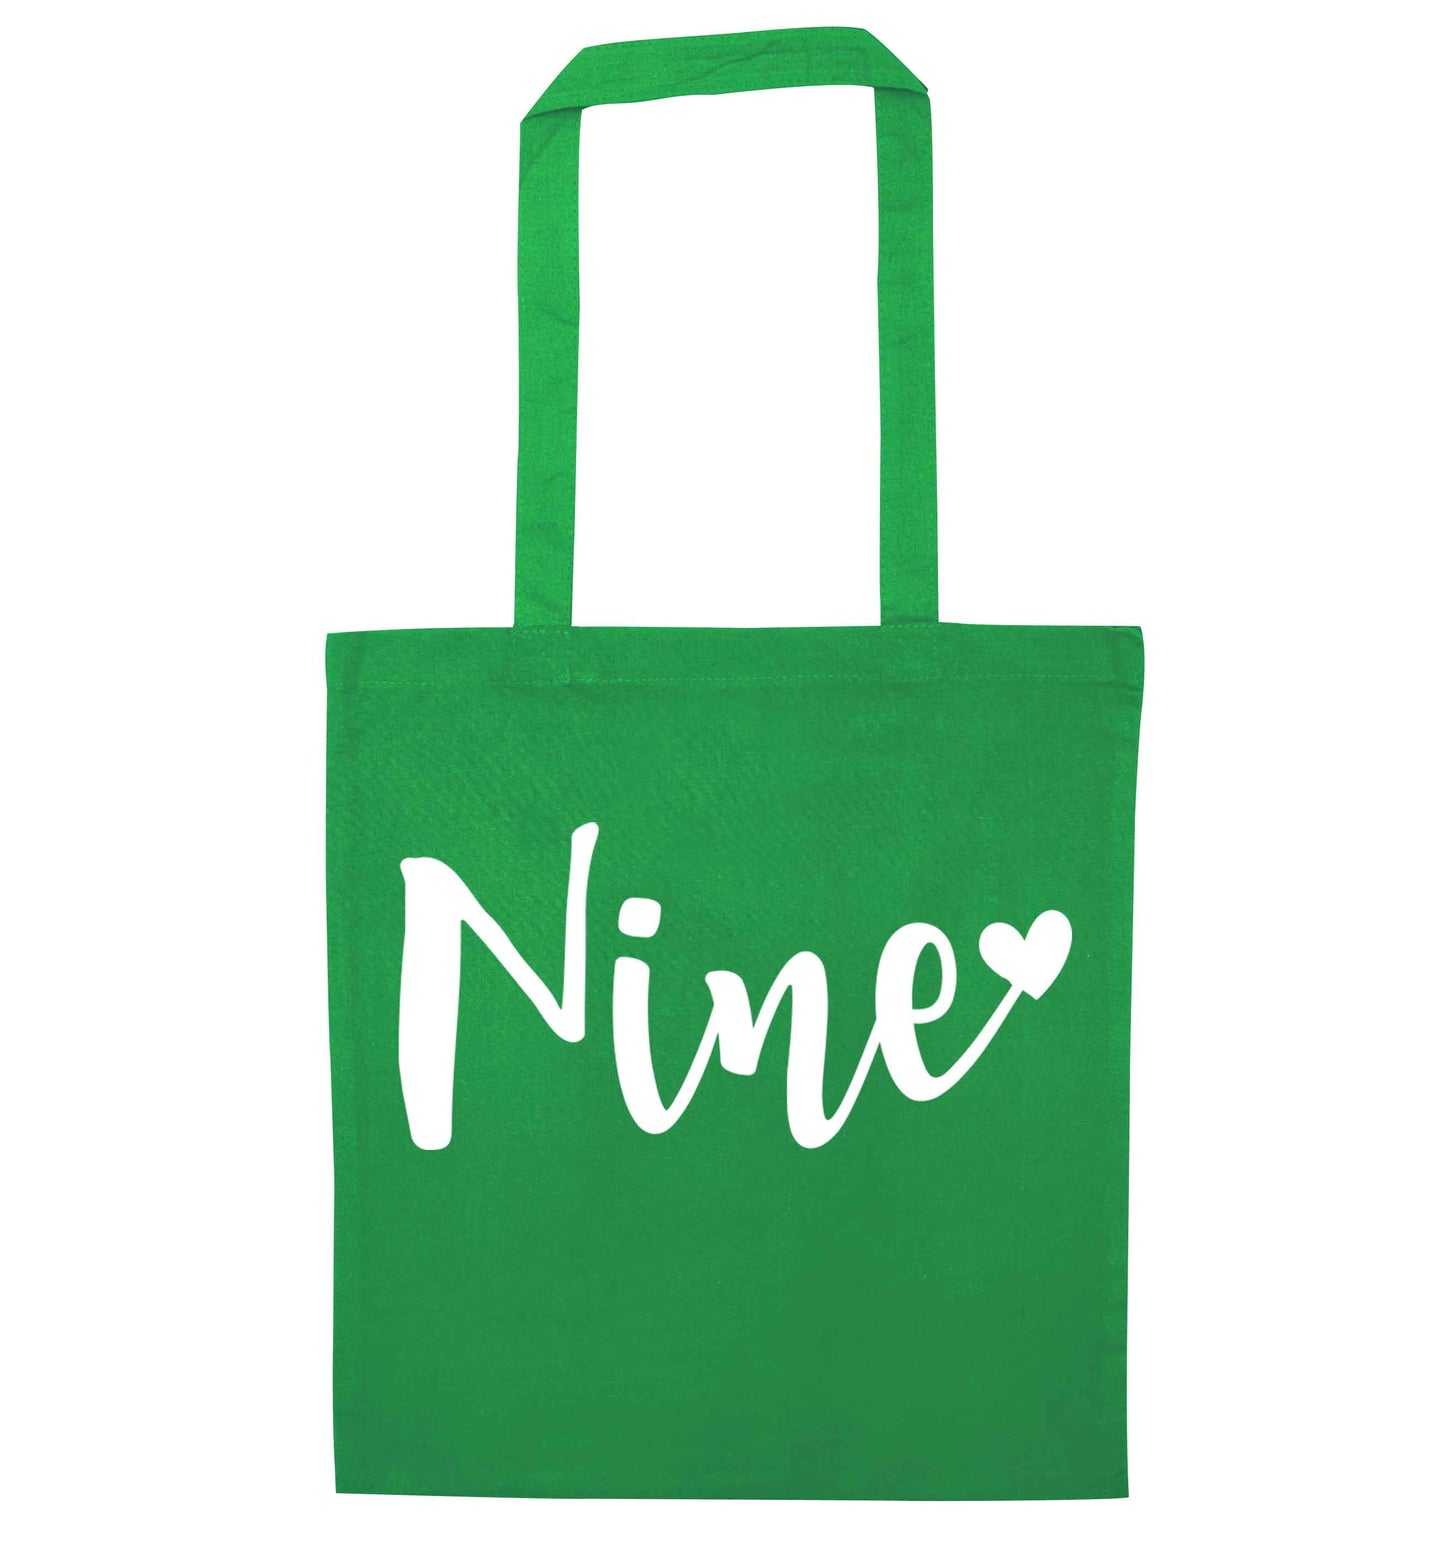 Nine and heart green tote bag